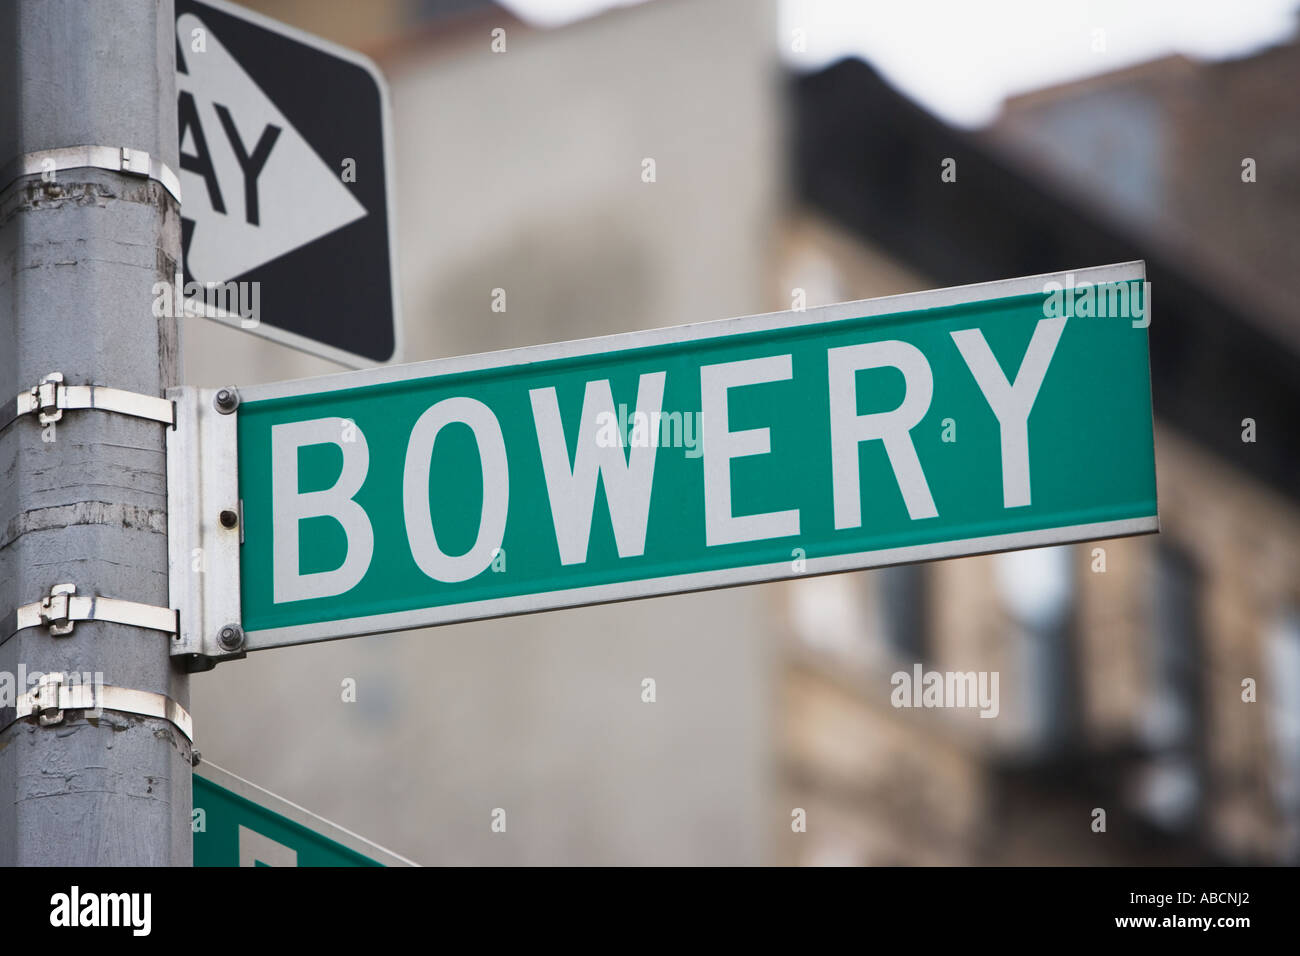 Bowery street sign Stock Photo